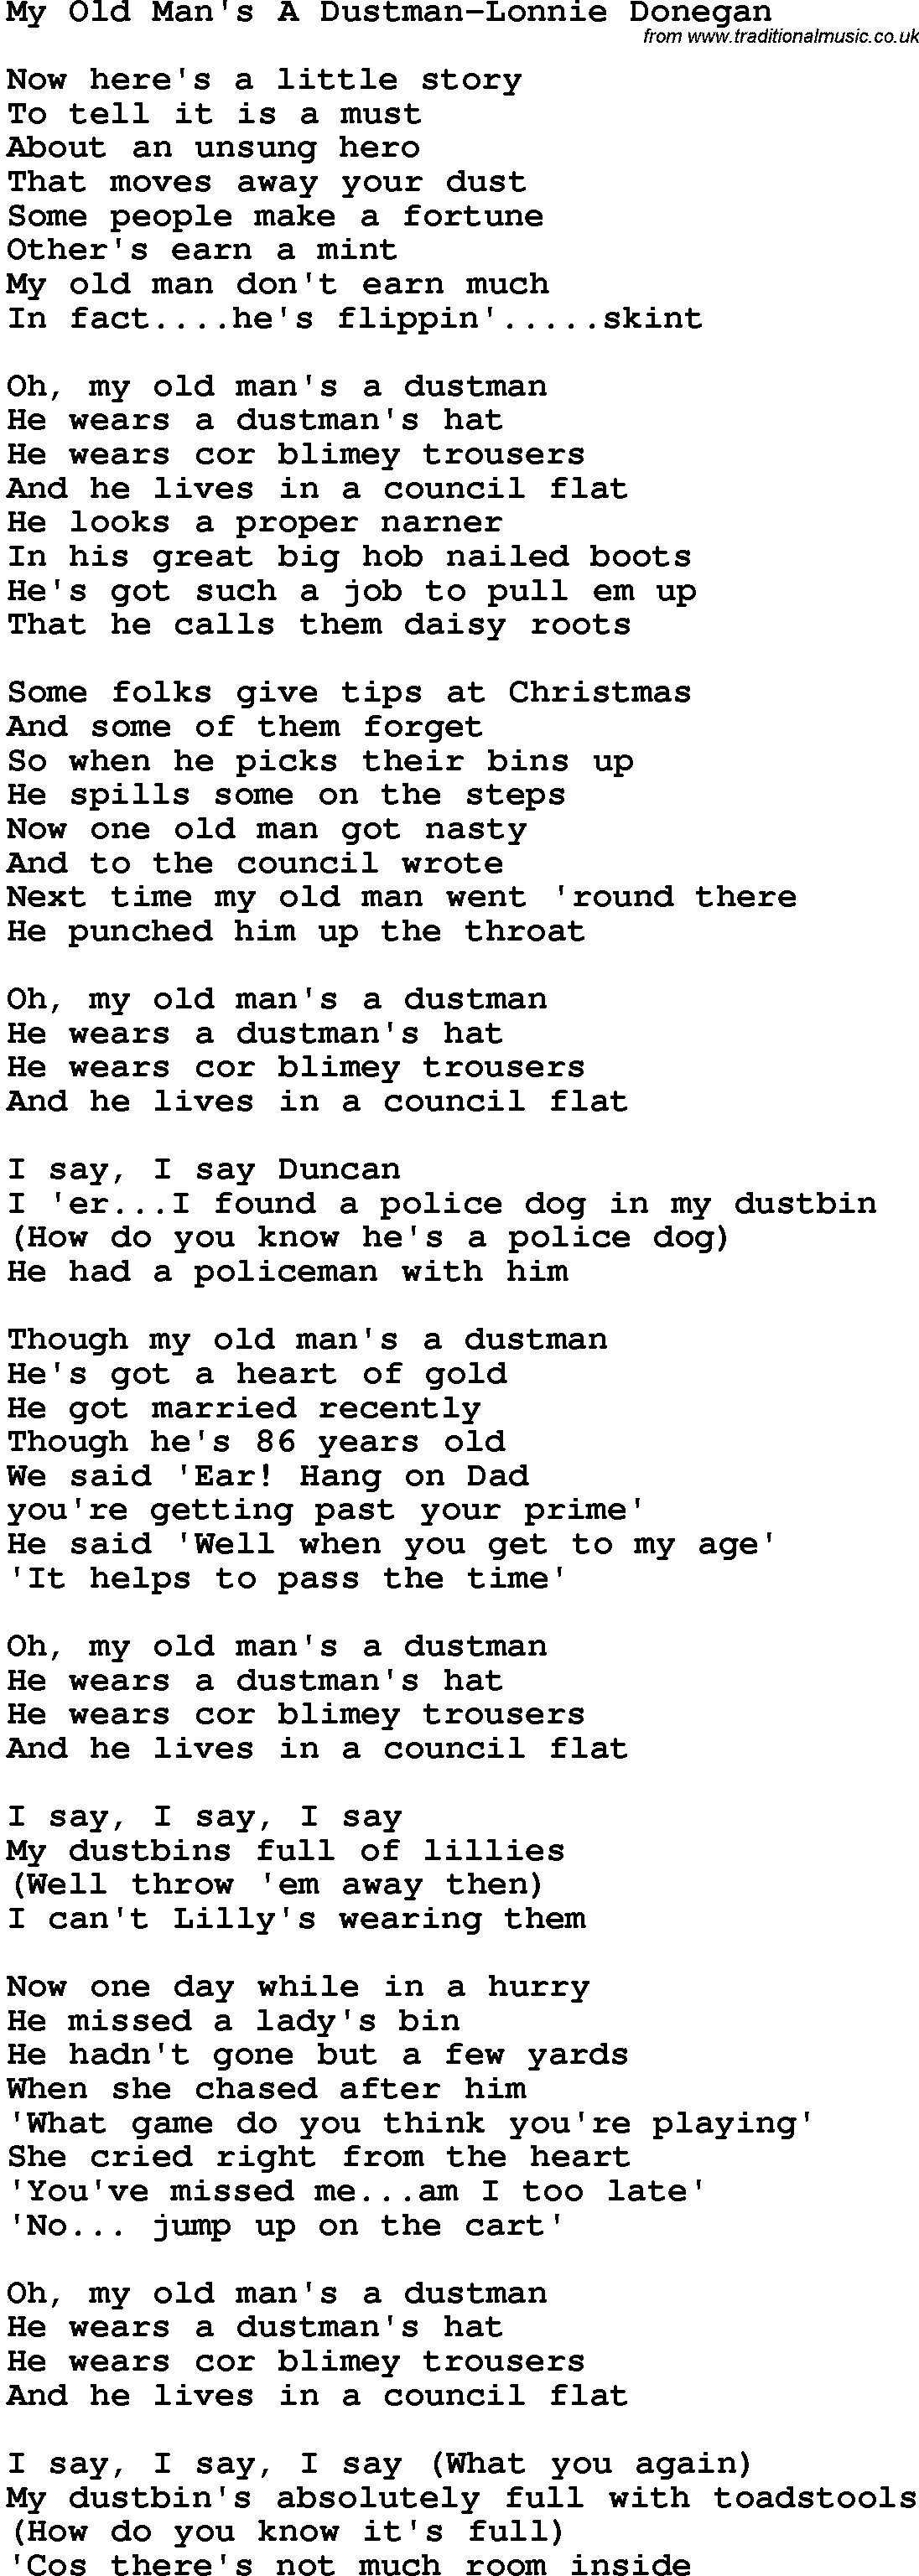 Novelty song: My Old Man's A Dustman-Lonnie Donegan lyrics